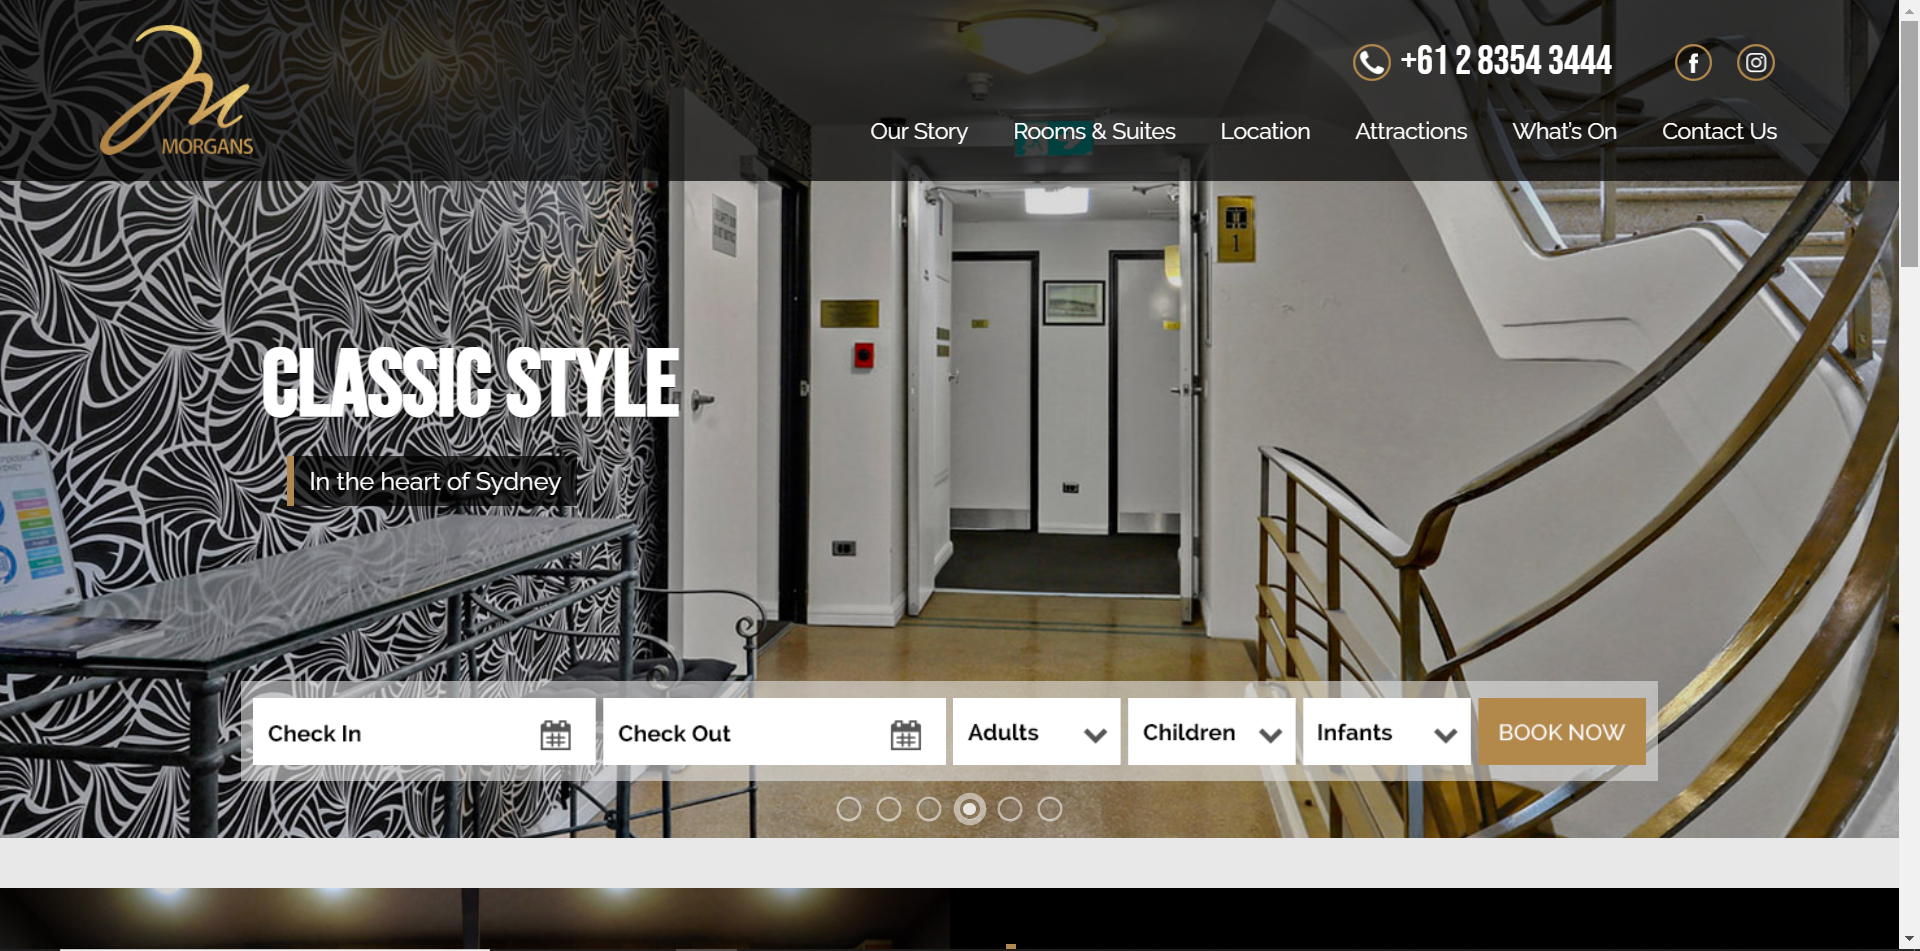 Morgans Boutique Hotel Website Design, Online Marketing